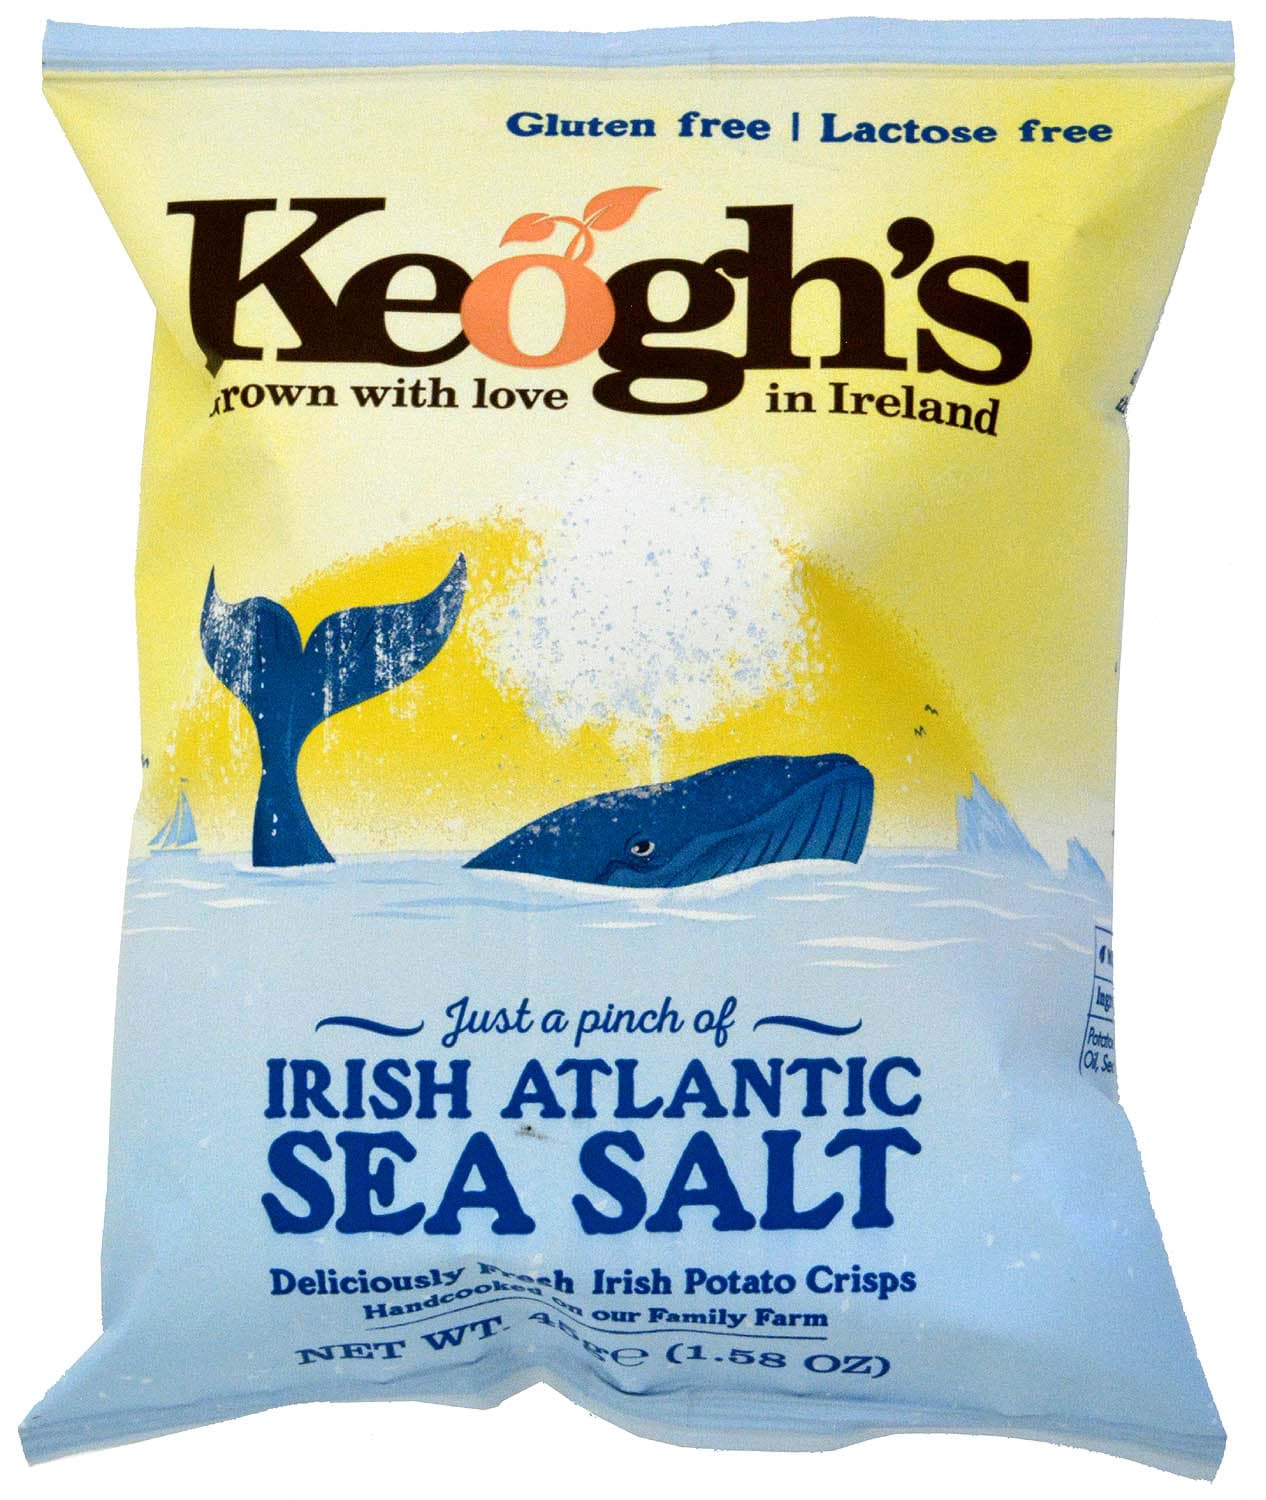 Bild von Keoghs Irish Atlantic Sea Salt Crisps 45g Chips